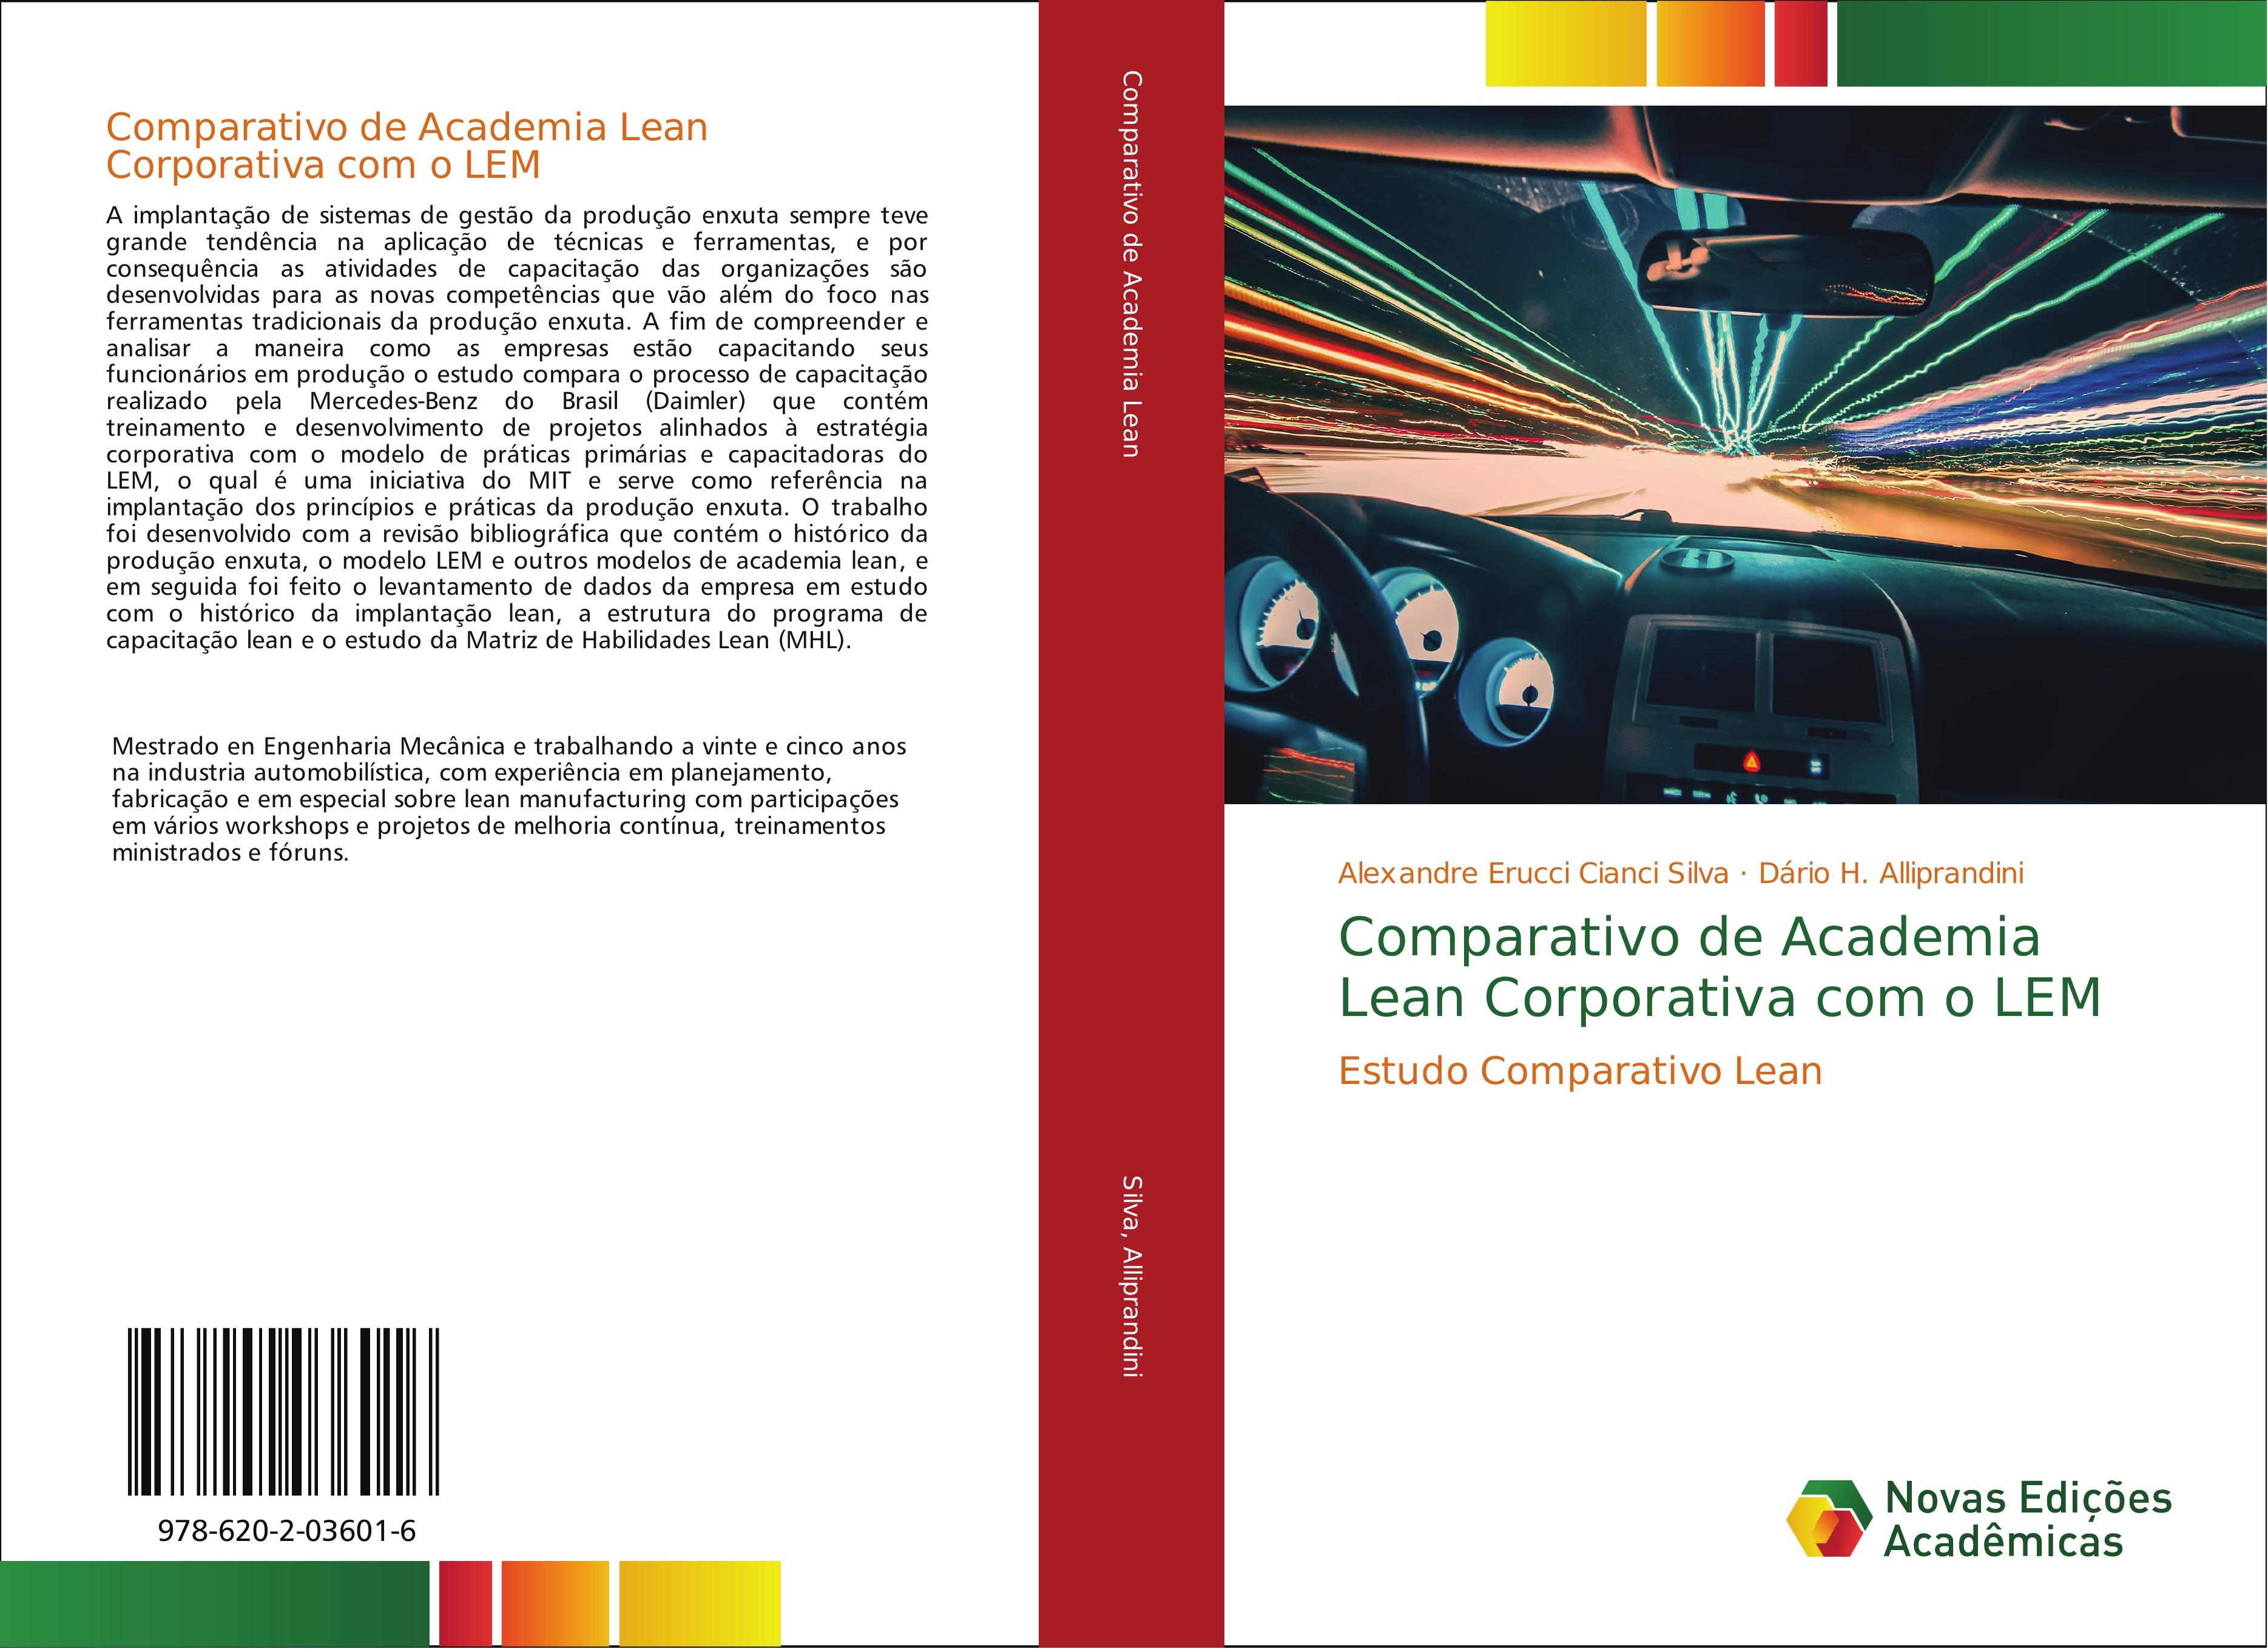 Comparativo de Academia Lean Corporativa com o LEM - Alexandre Erucci Cianci Silva Dário H. Alliprandini